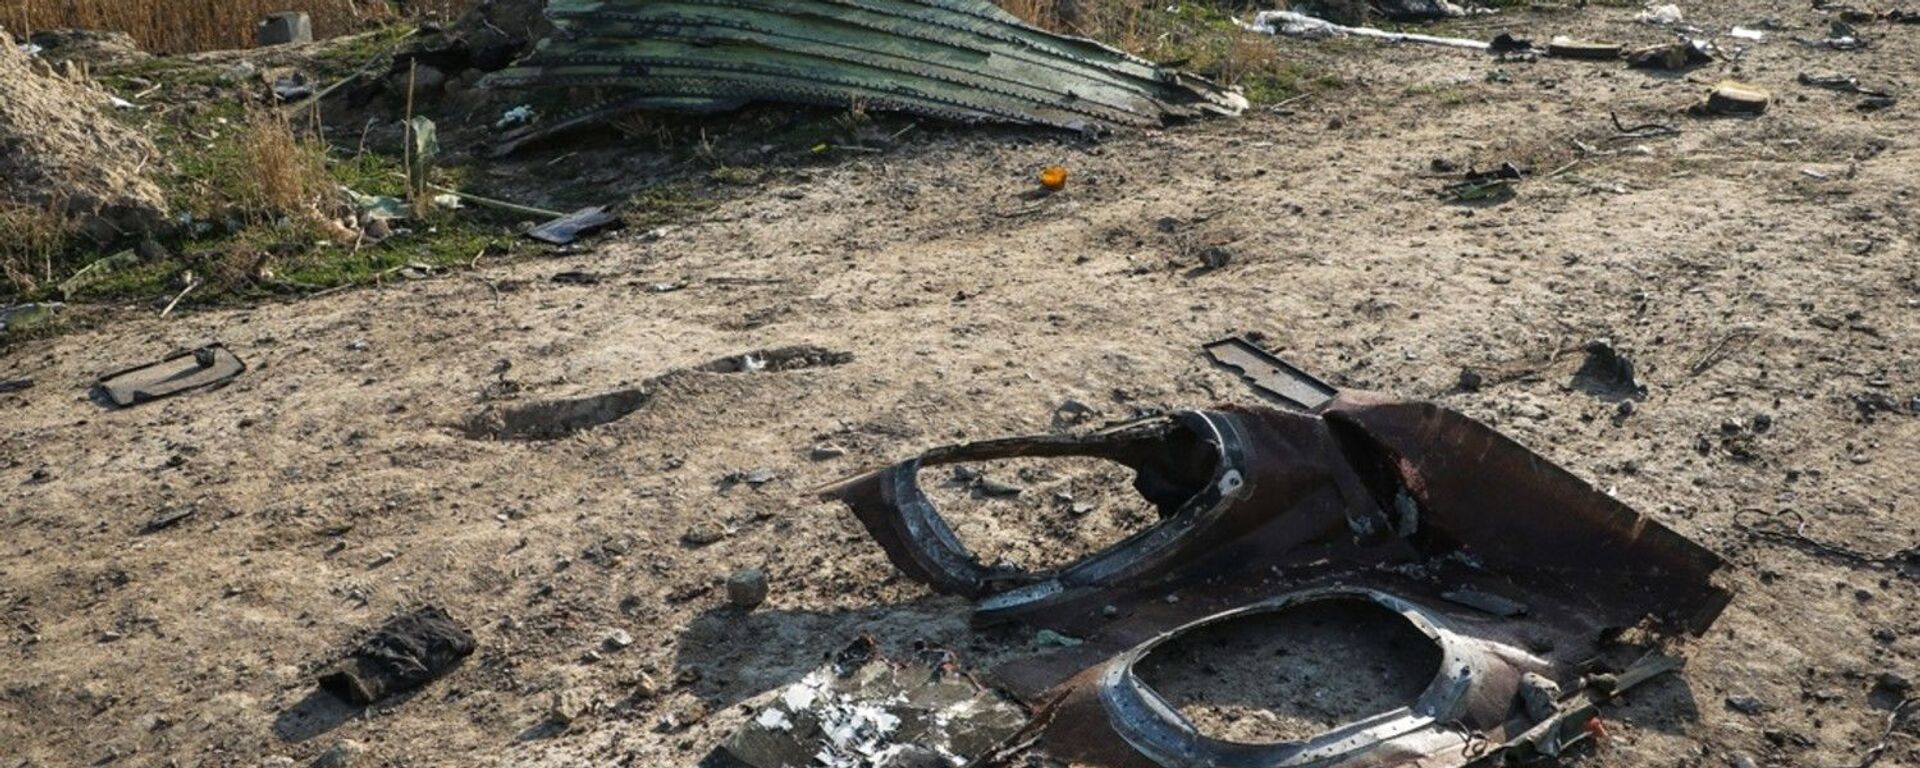 Image captures debris found at the crash site of Ukraine International Airlines Flight PS752 in Tehran, Iran. - Sputnik International, 1920, 05.01.2021